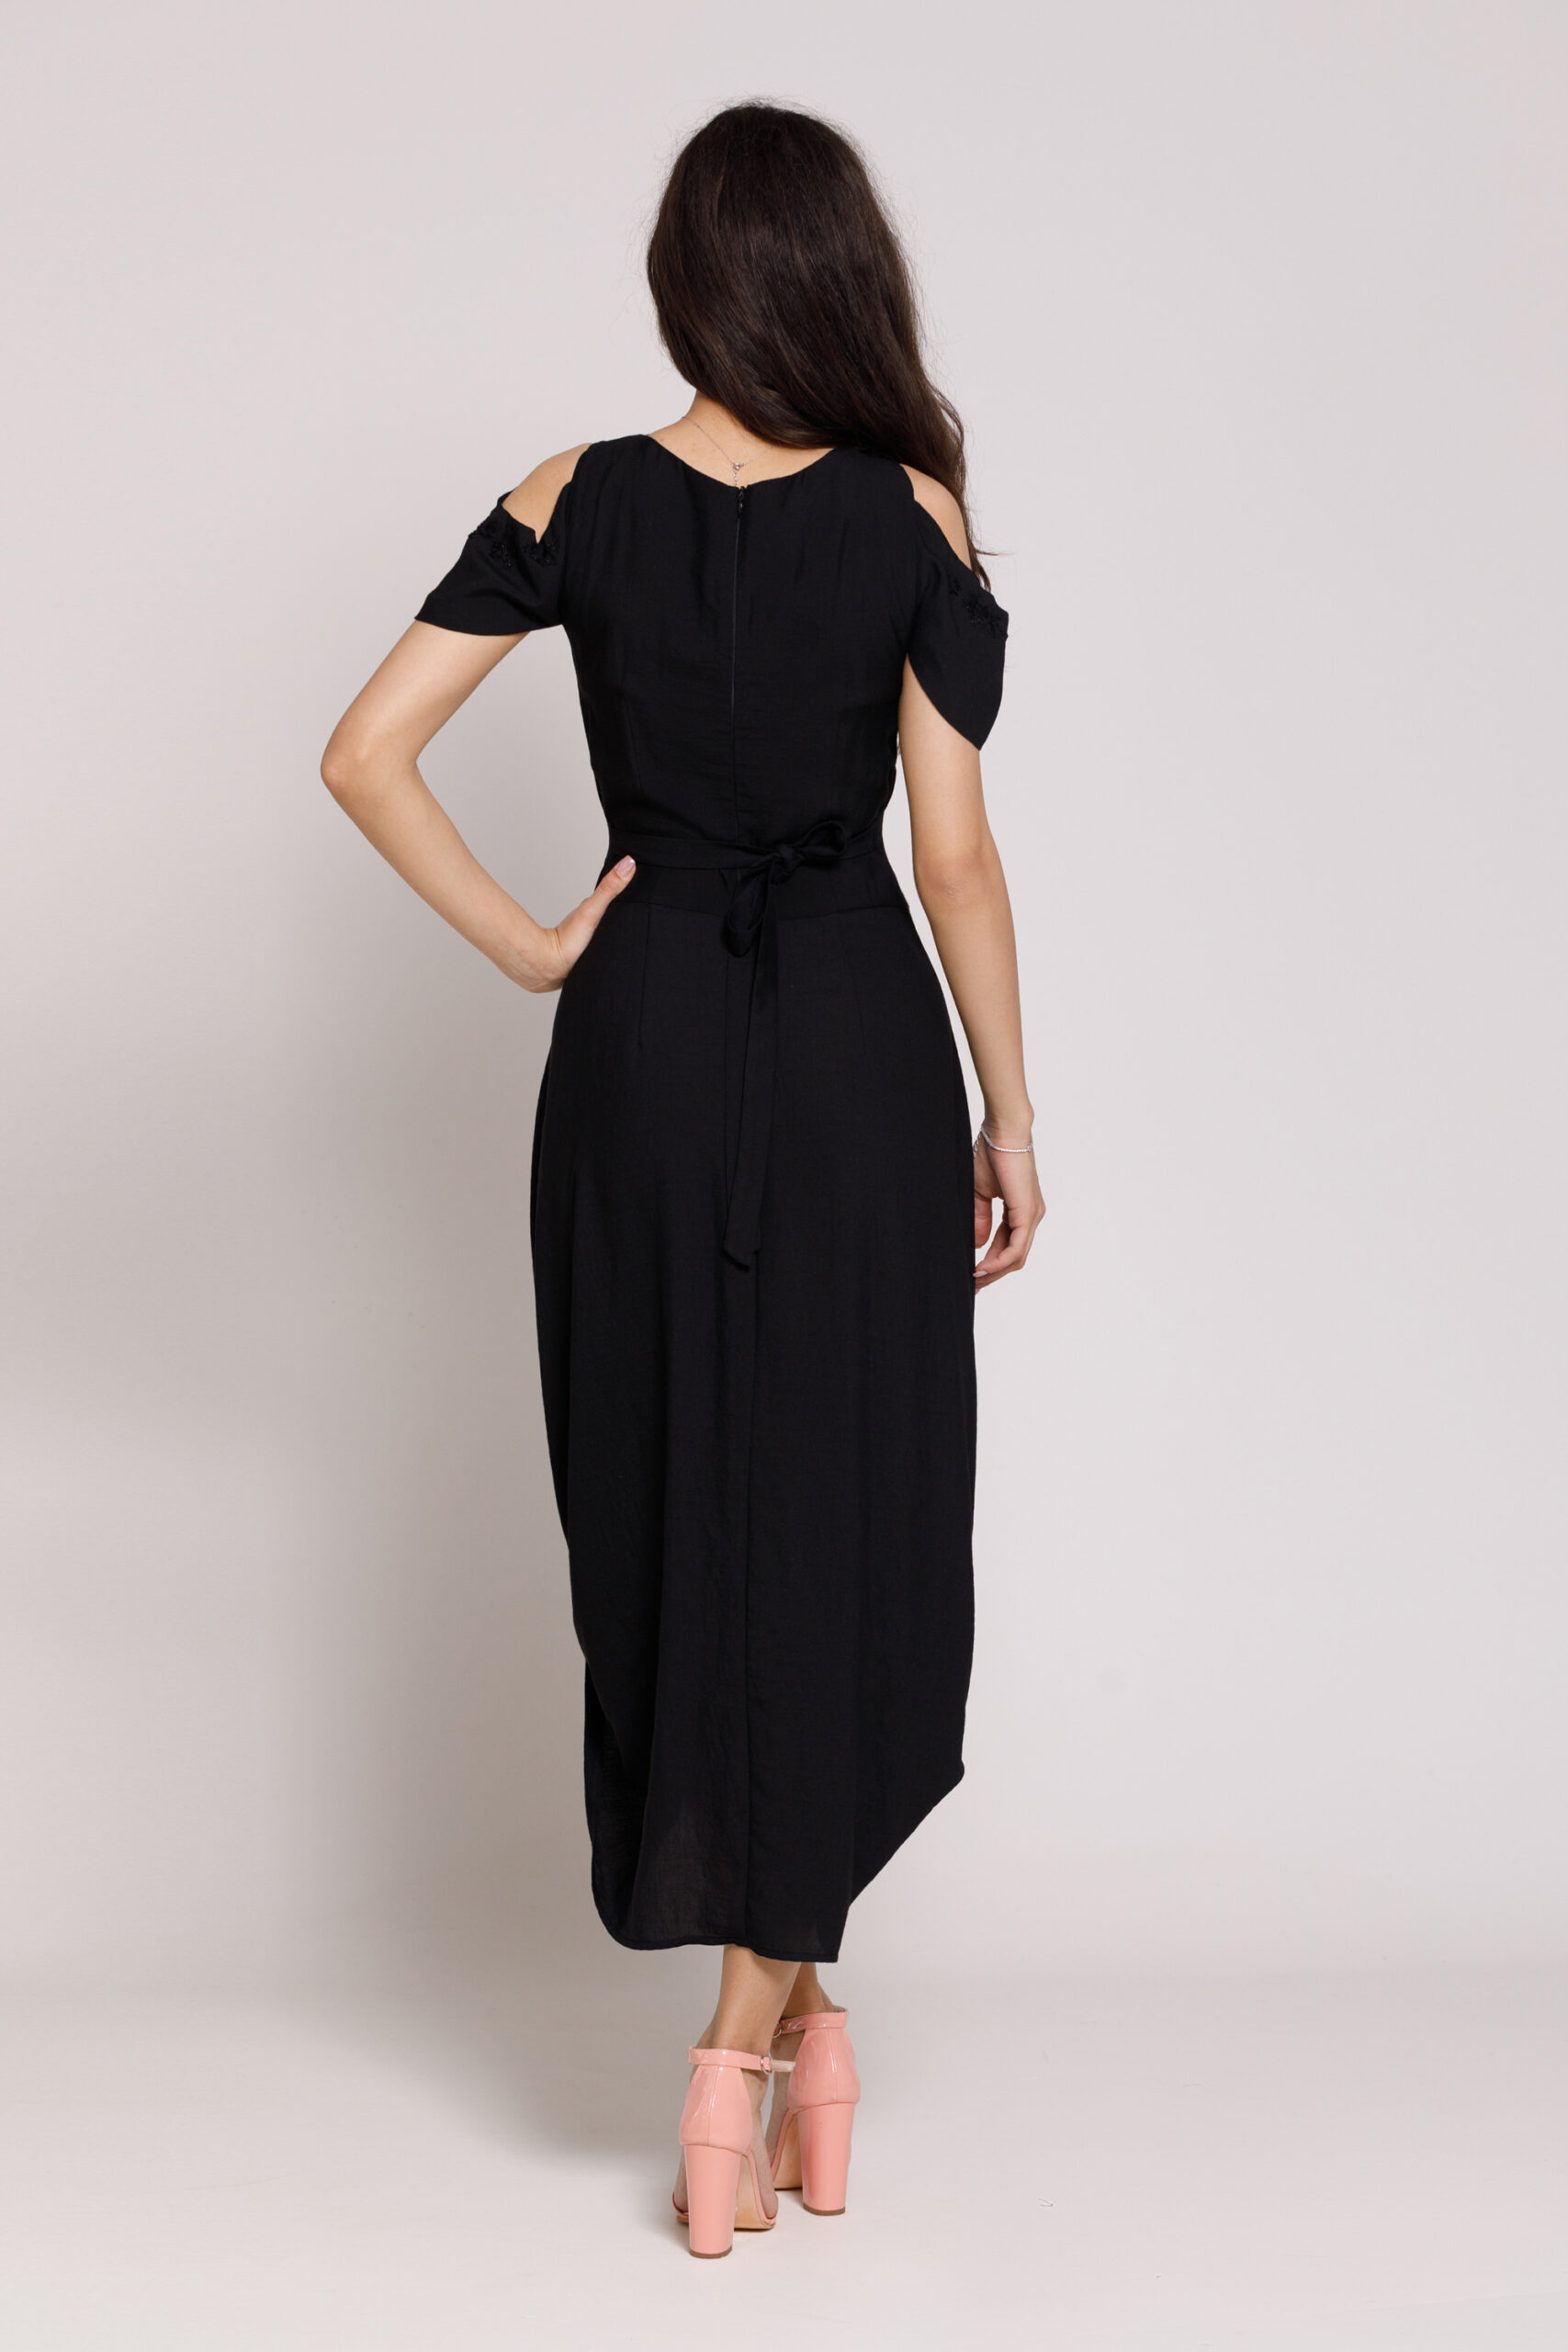 ADALIA Elegant dress in black viscose. Natural fabrics, original design, handmade embroidery